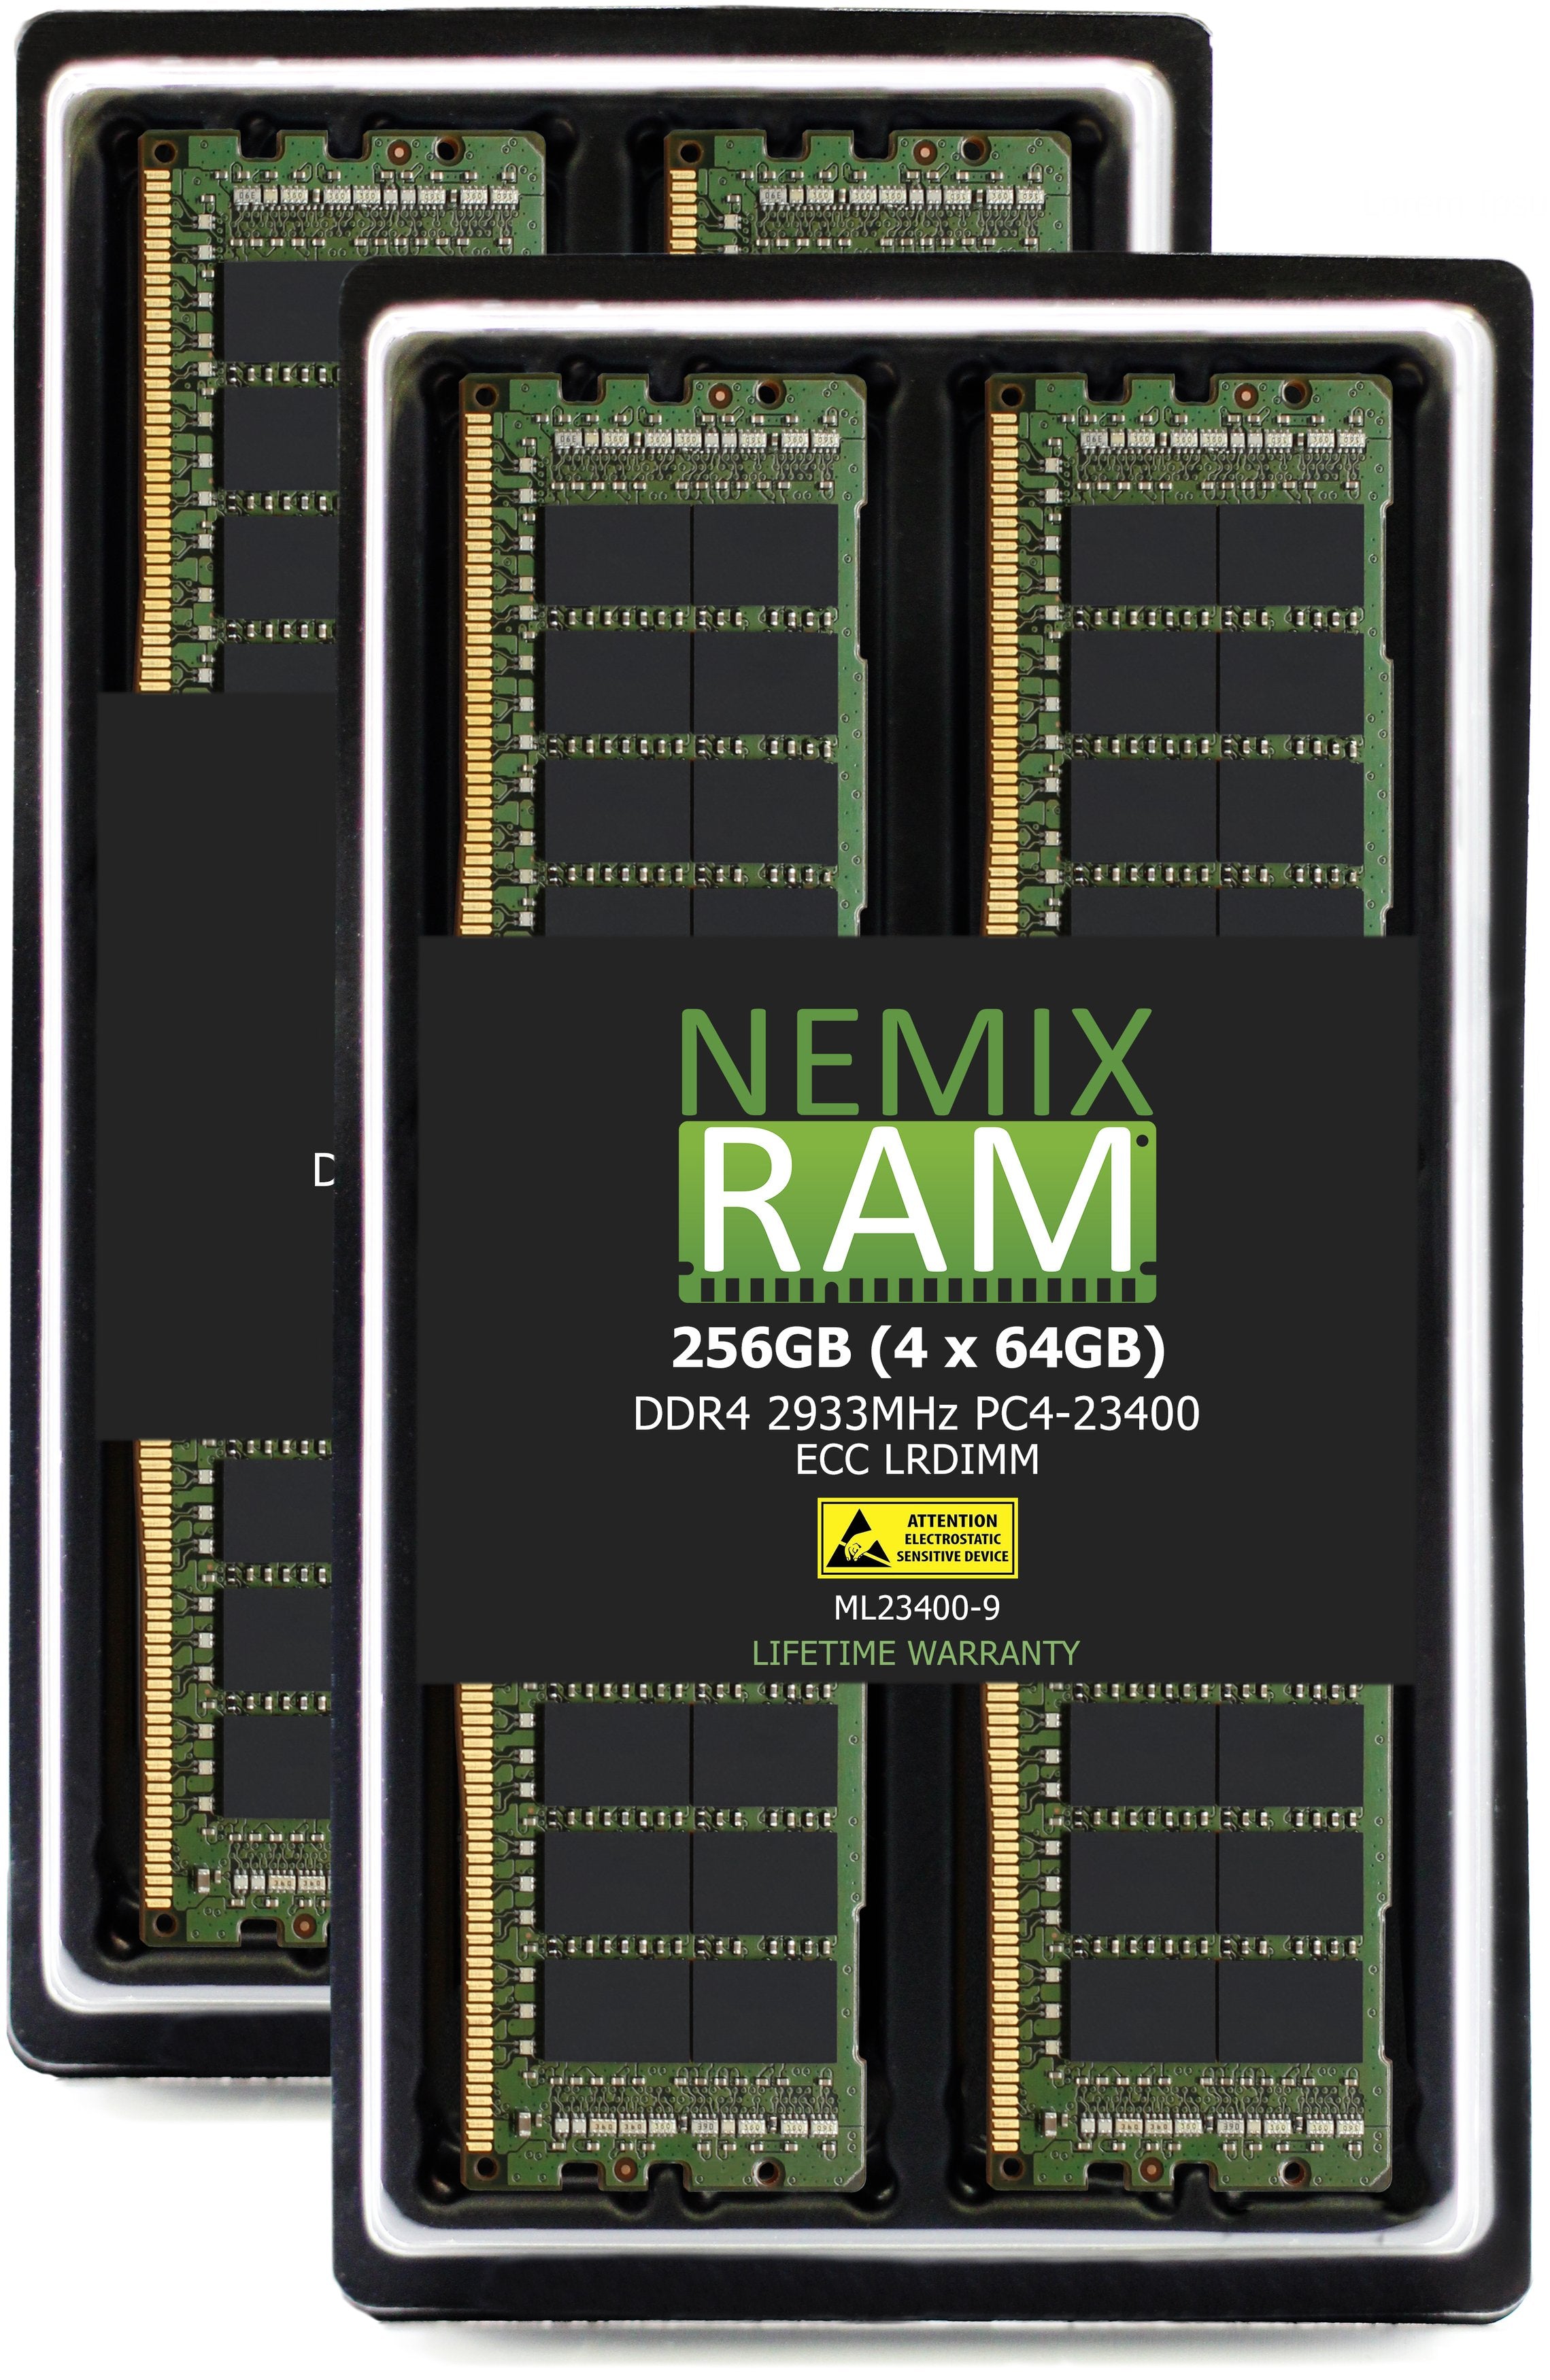 DDR4 2933MHZ PC4-23400 LRDIMM for Apple Mac Pro 2019 7,1